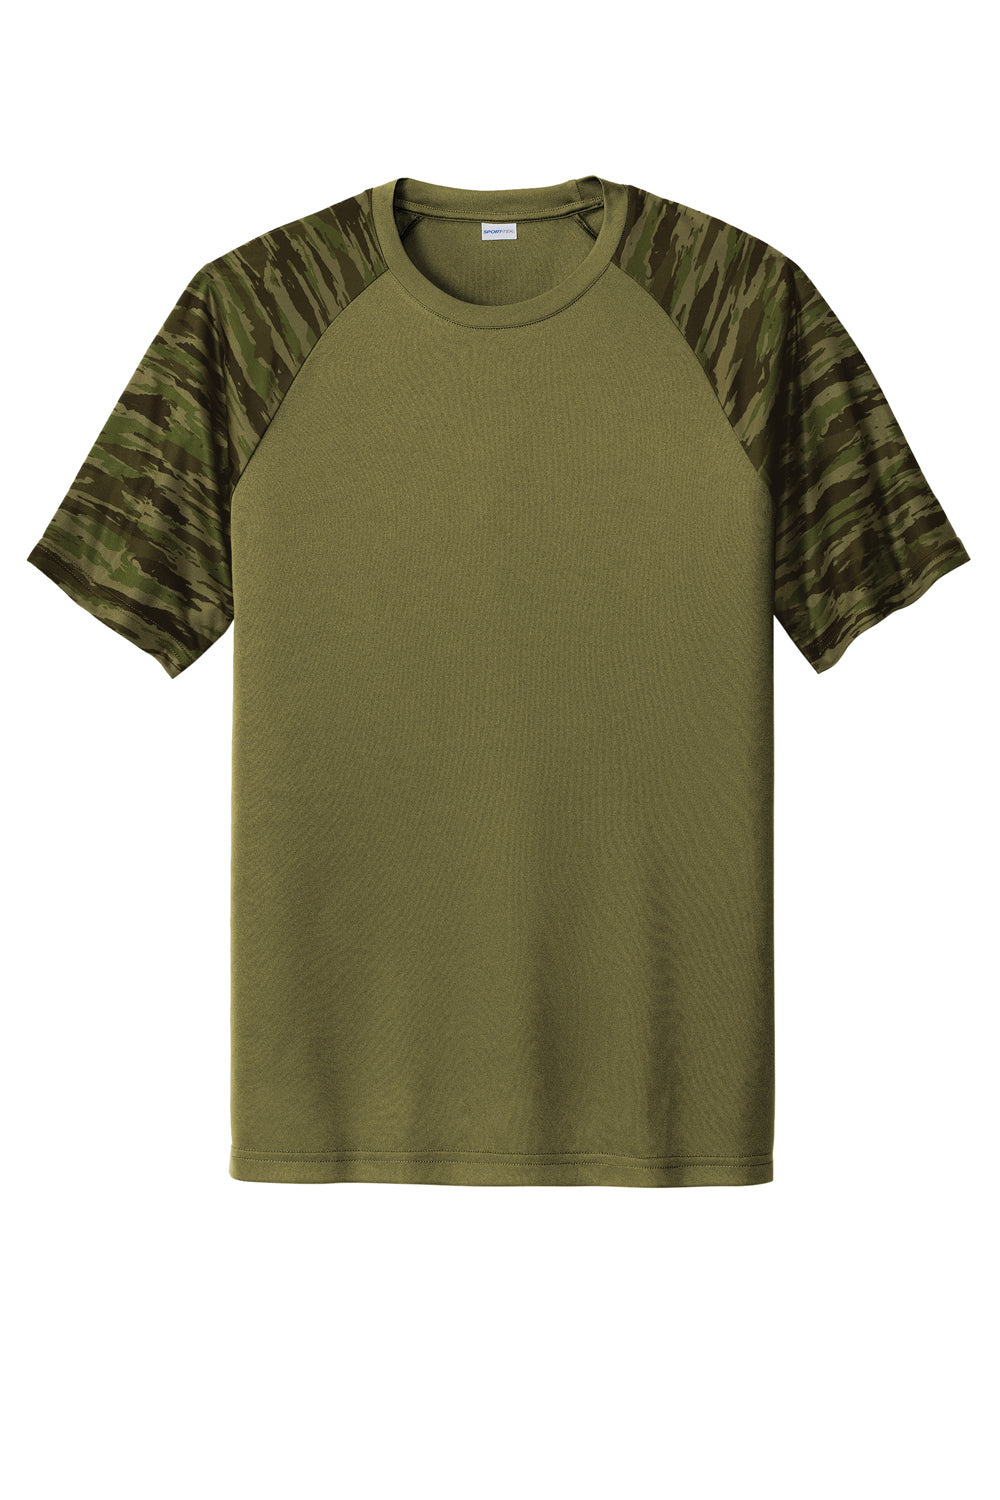 Sport-Tek Mens Drift Camo Colorblock Short Sleeve Crewneck T-Shirt Olive Drab Green Flat Front